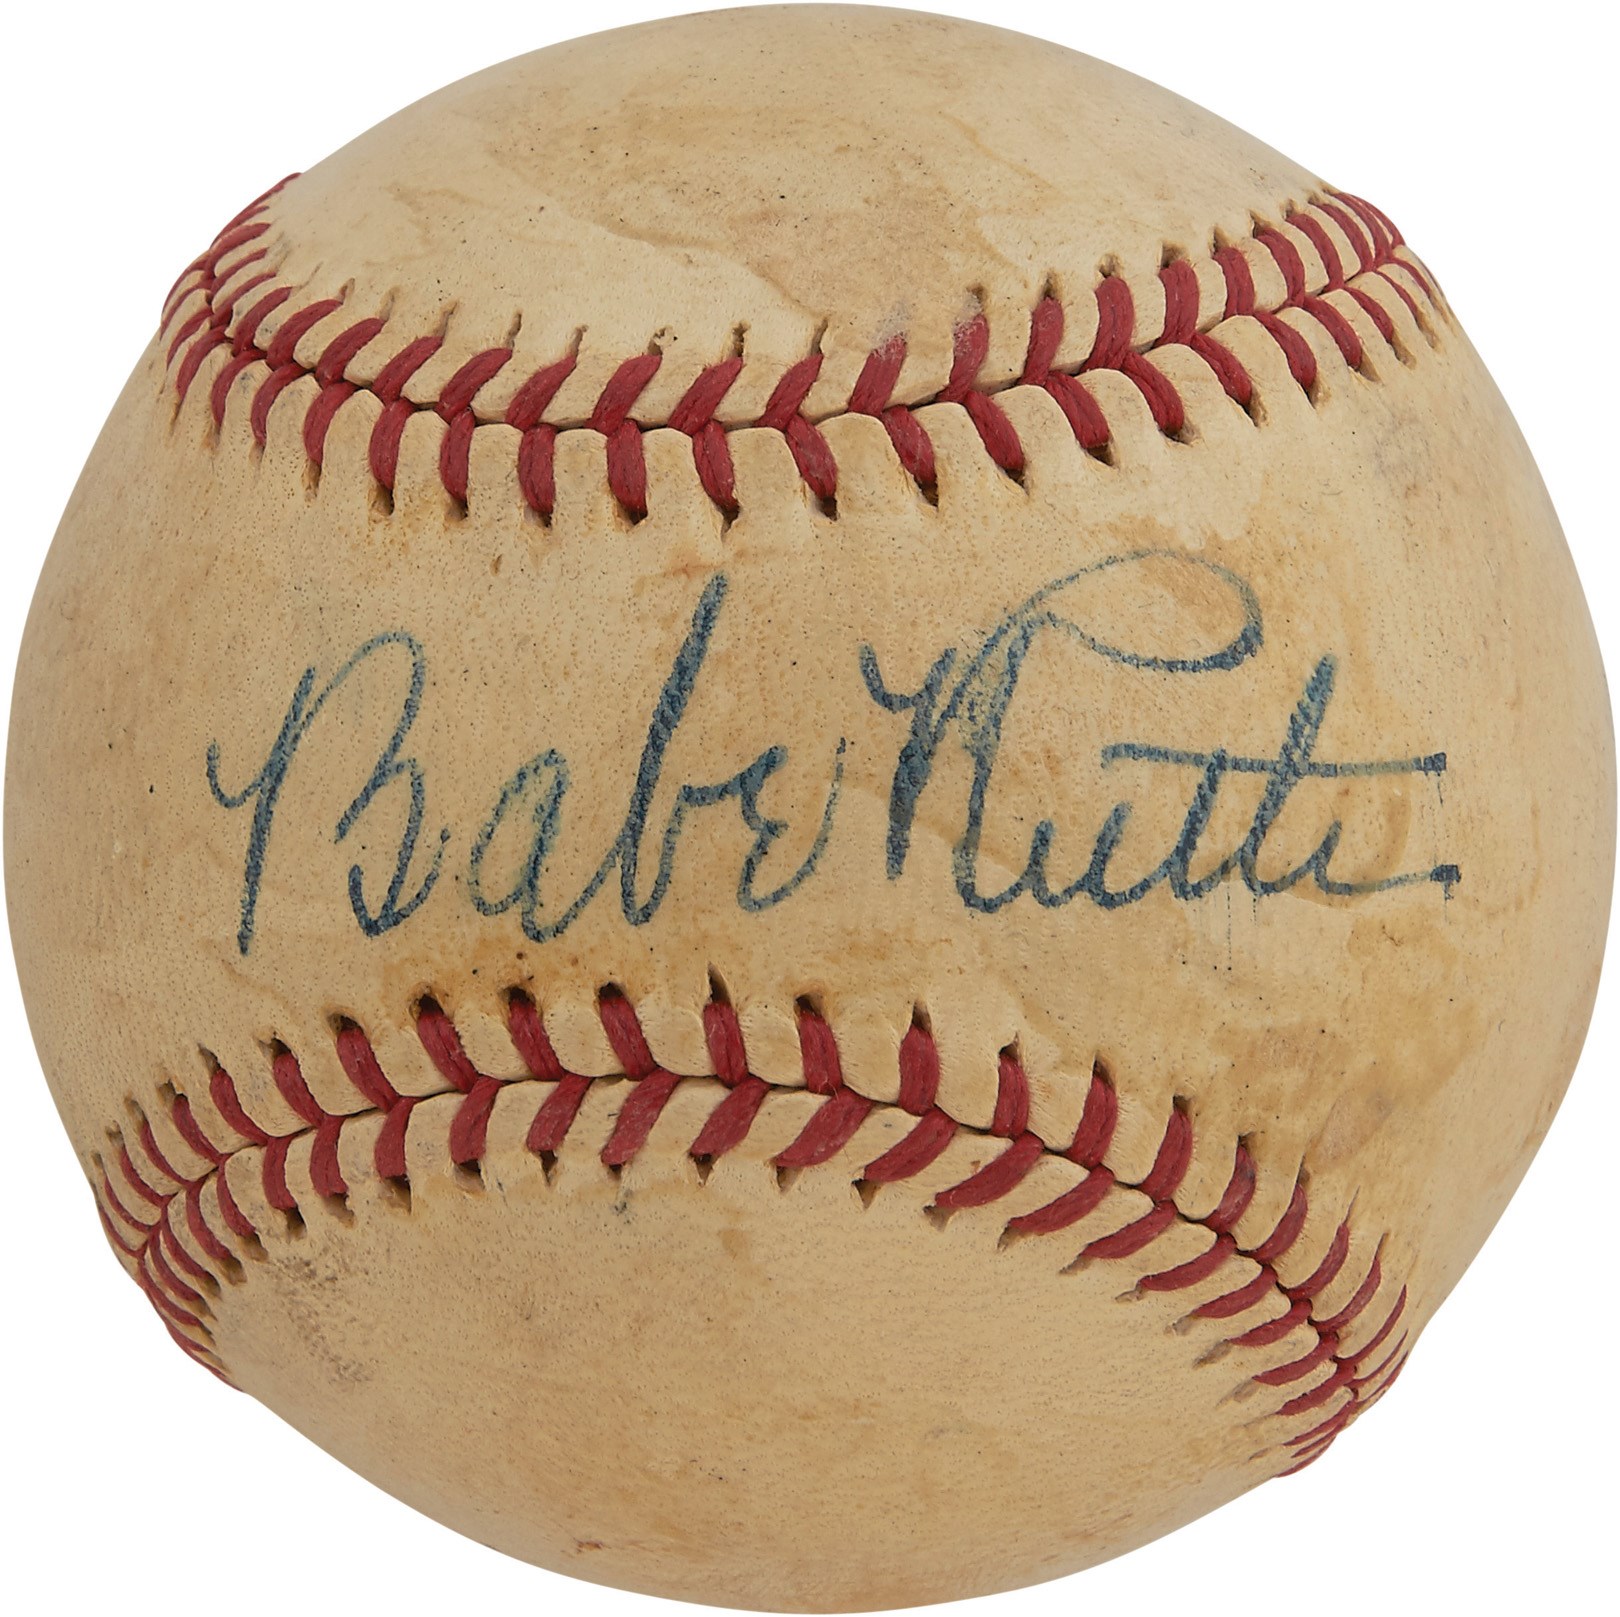 - Beautiful Babe Ruth Single-Signed Baseball (PSA)